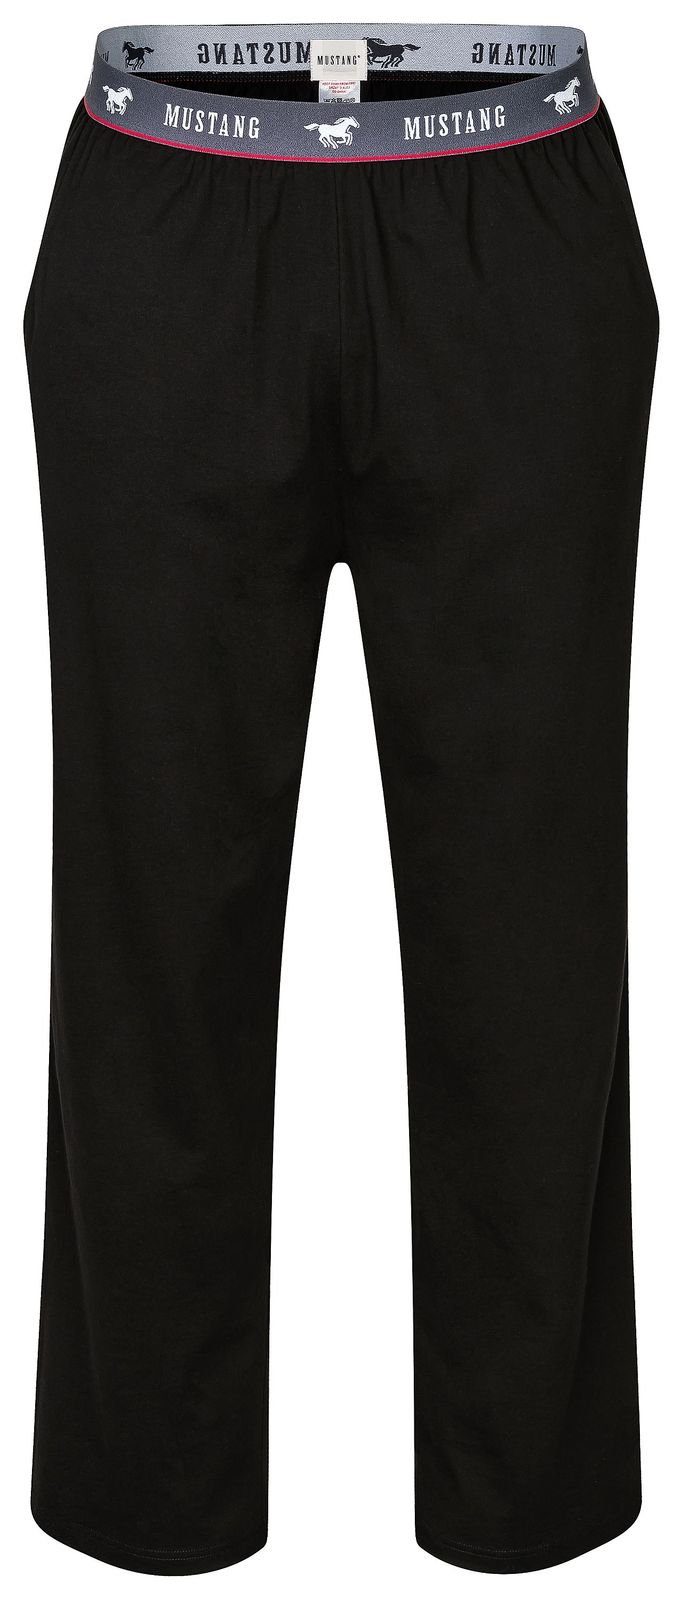 MUSTANG Loungepants Long Pants Mustangbranding schwarz Hose Lounge roter Kontraststreifen und Freizeithose Trousers